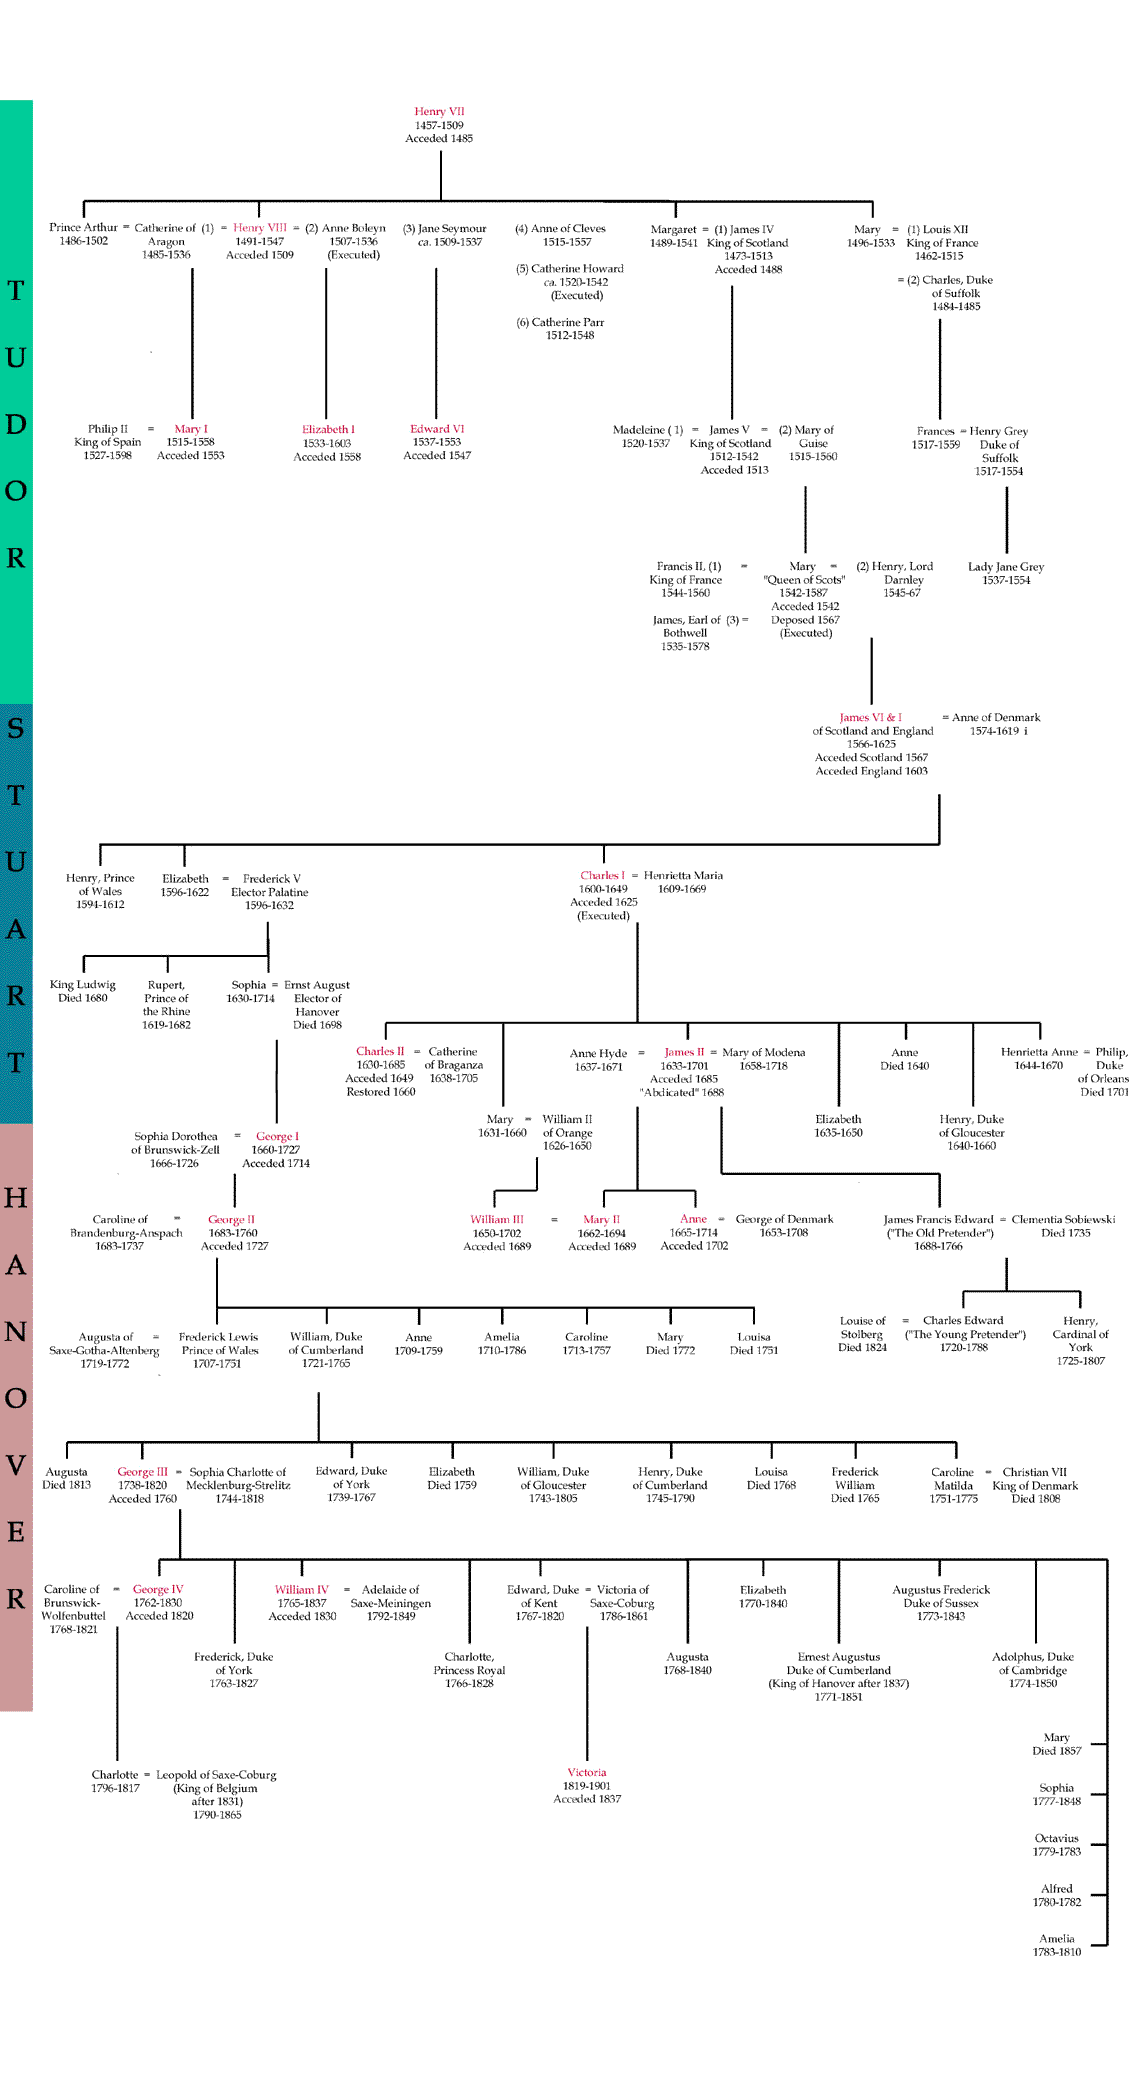 Tudor Succession Chart